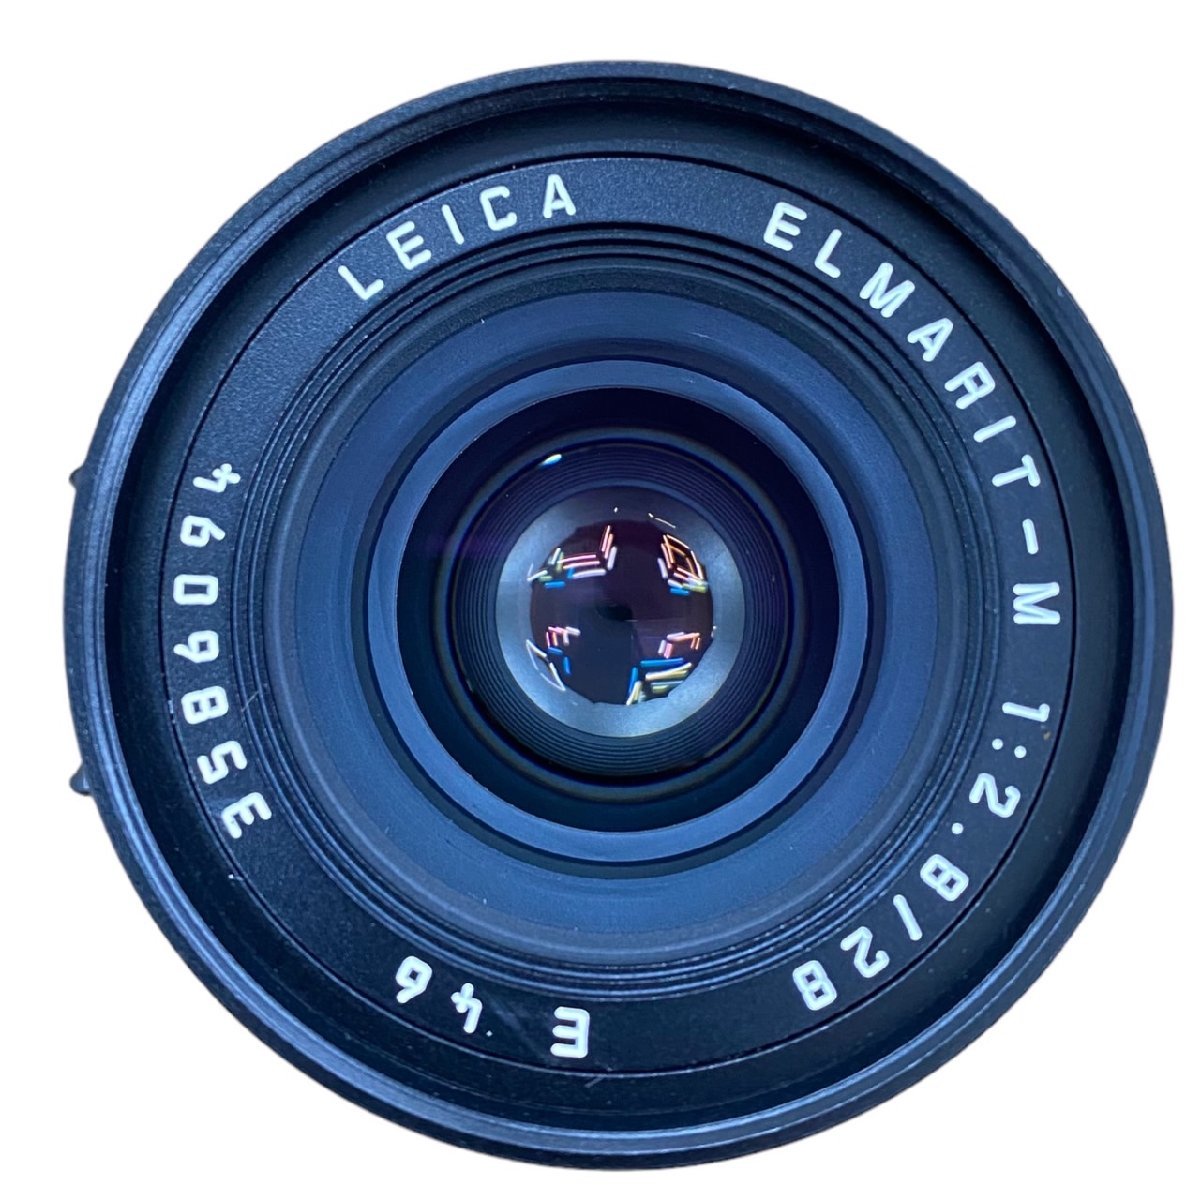 ◆◇◆Leica (ライカ) エルマリート M28mm F2.8 (E46) ブラック レンズ マニュアル 純正フード フィルタ 付き リング 動作確認済み_画像2